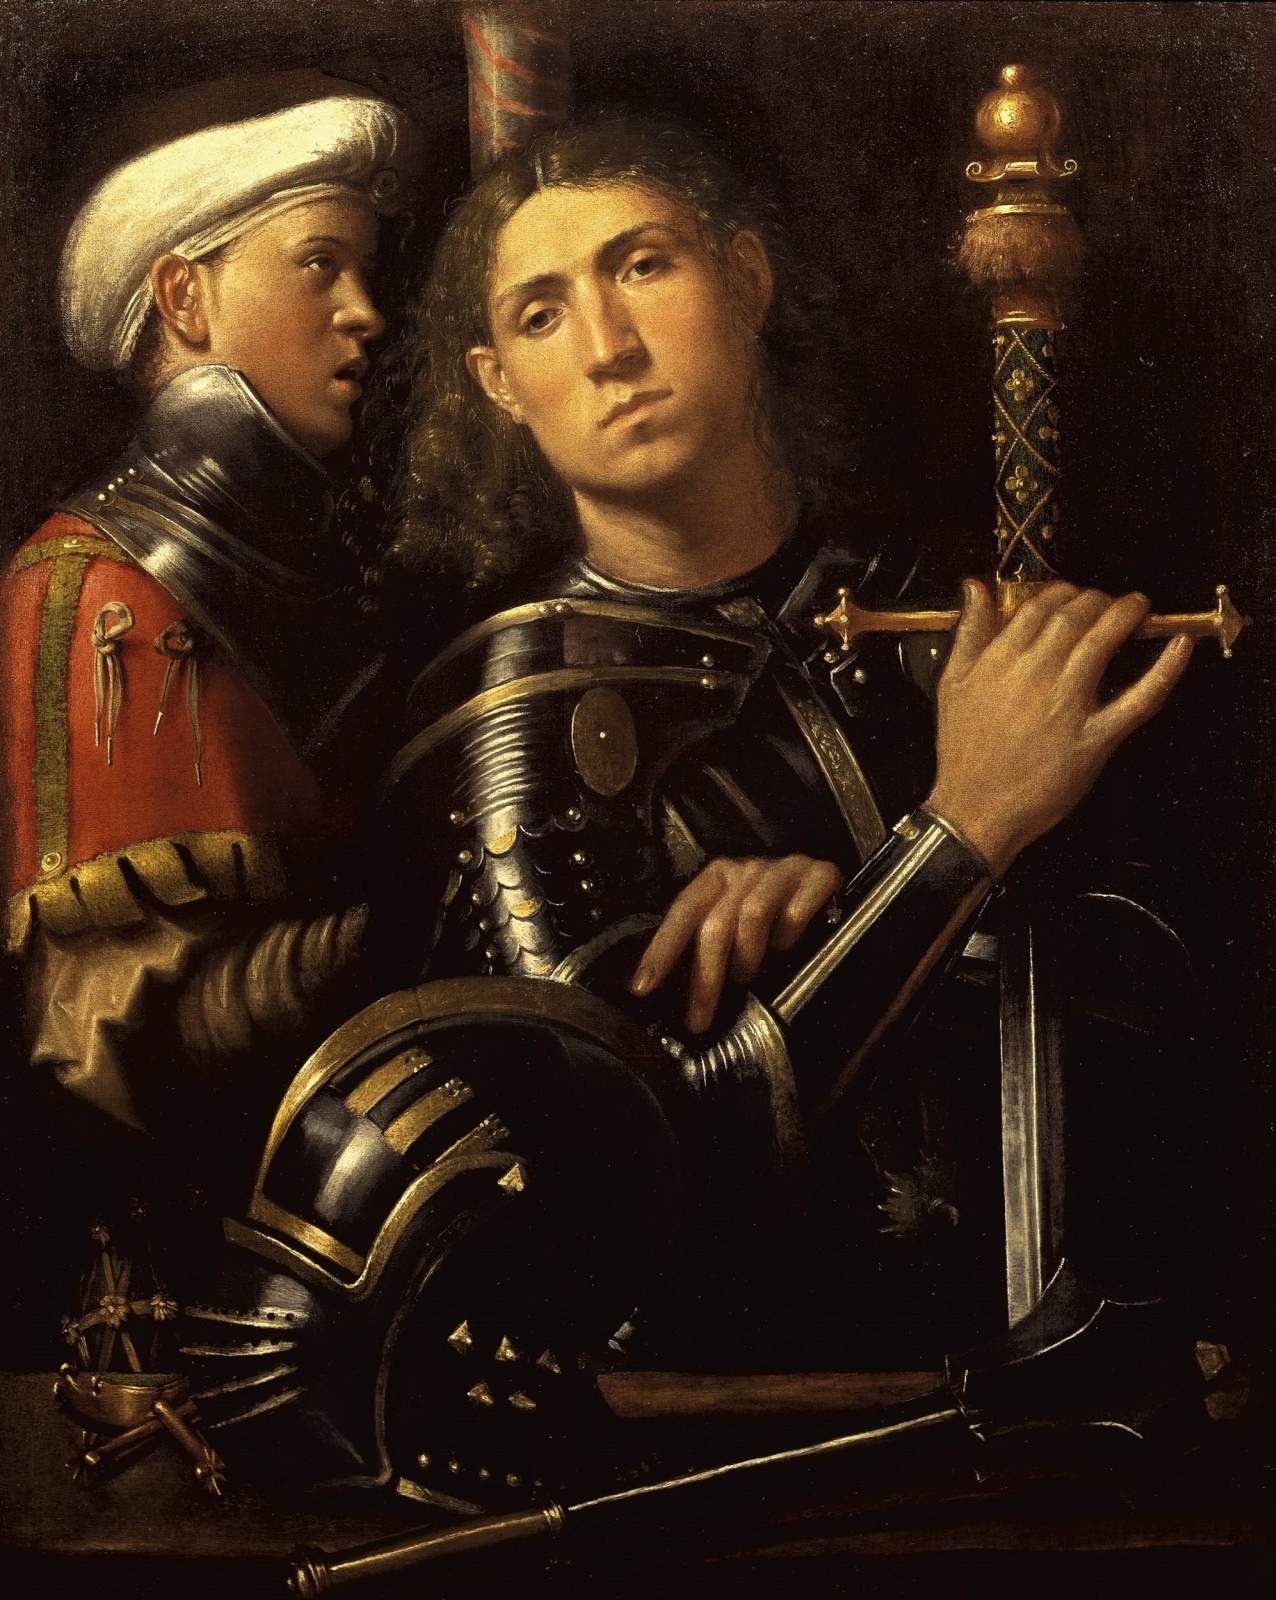 Retrato de un Hombre con Armadura con un Escudero